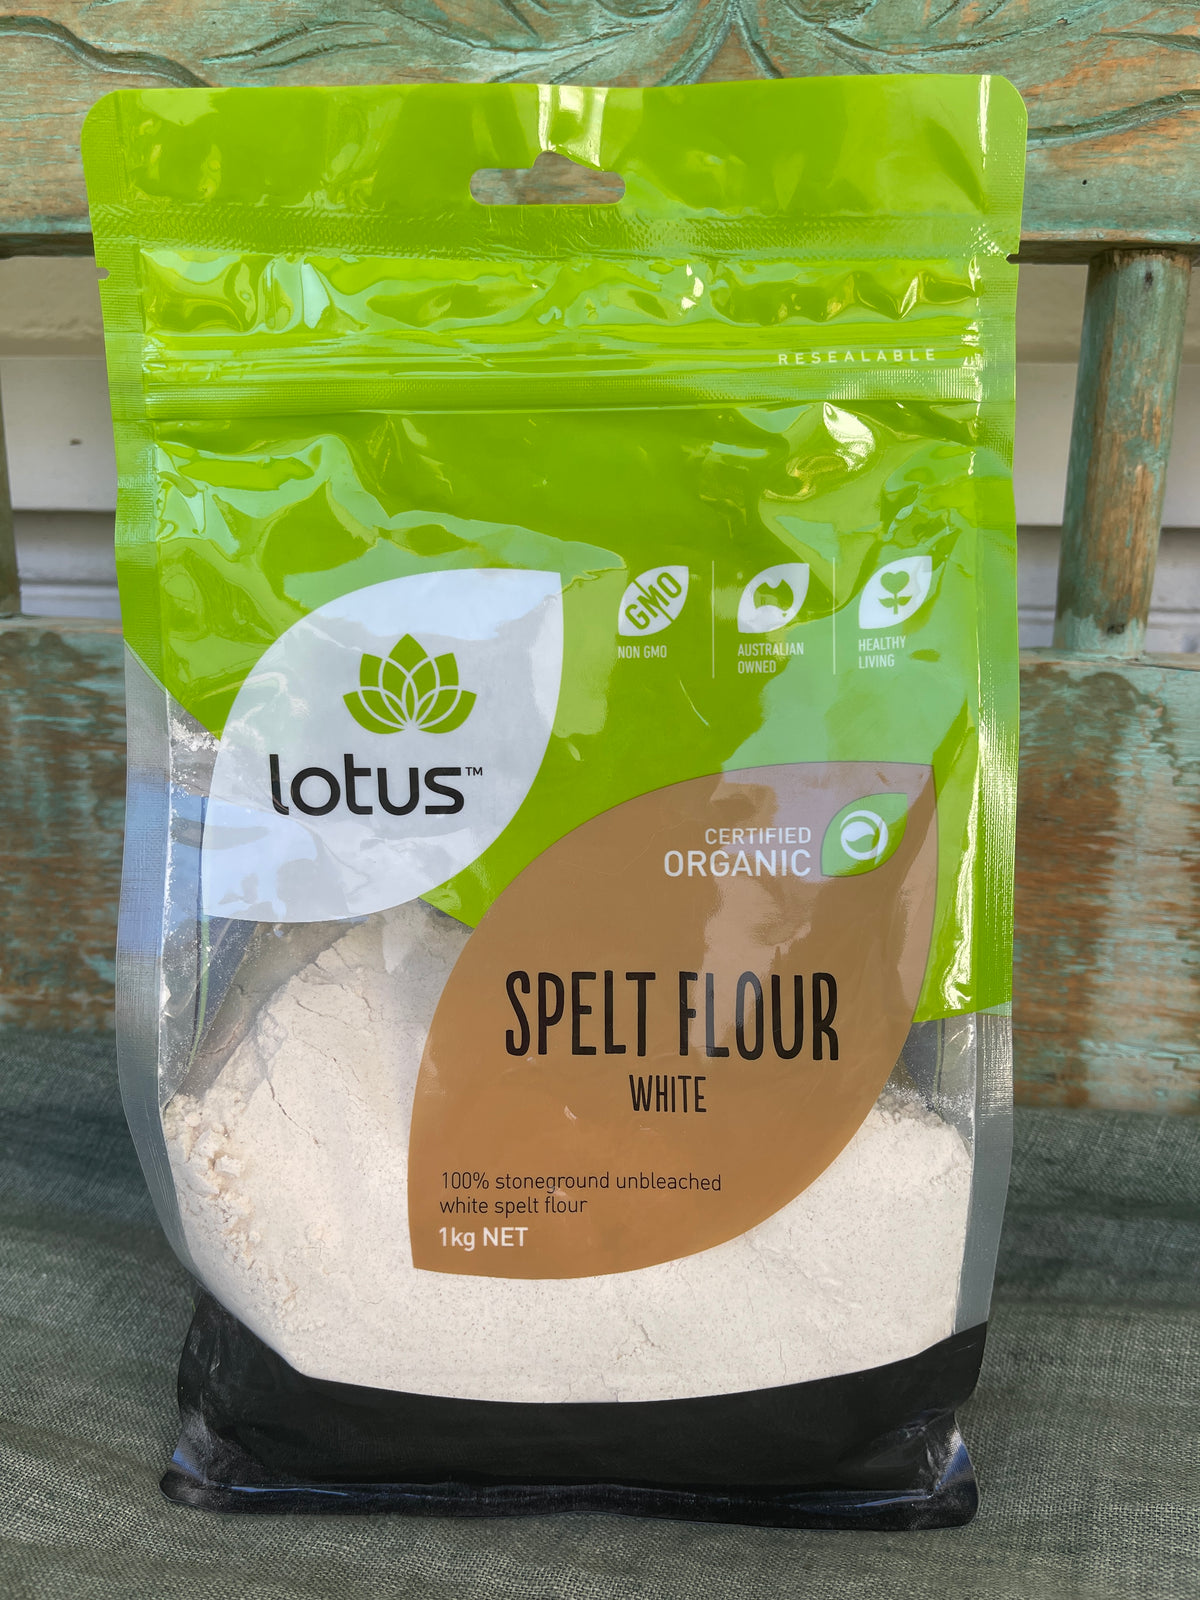 Lotus Spelt Flour 1kg